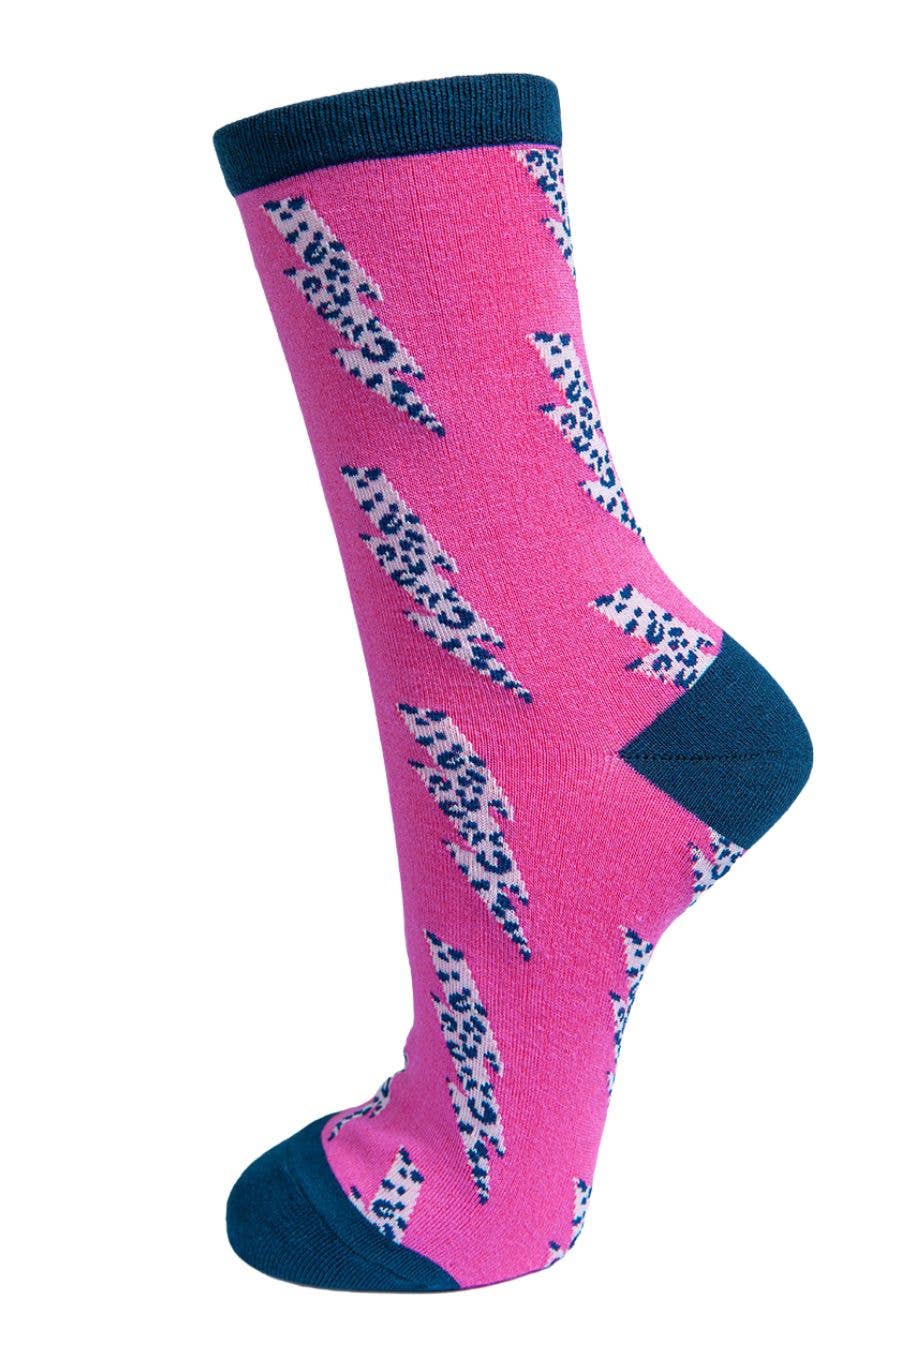 Sock Talk - Womens Bamboo Socks Leopard Print Socks Lightning Bolt Pink